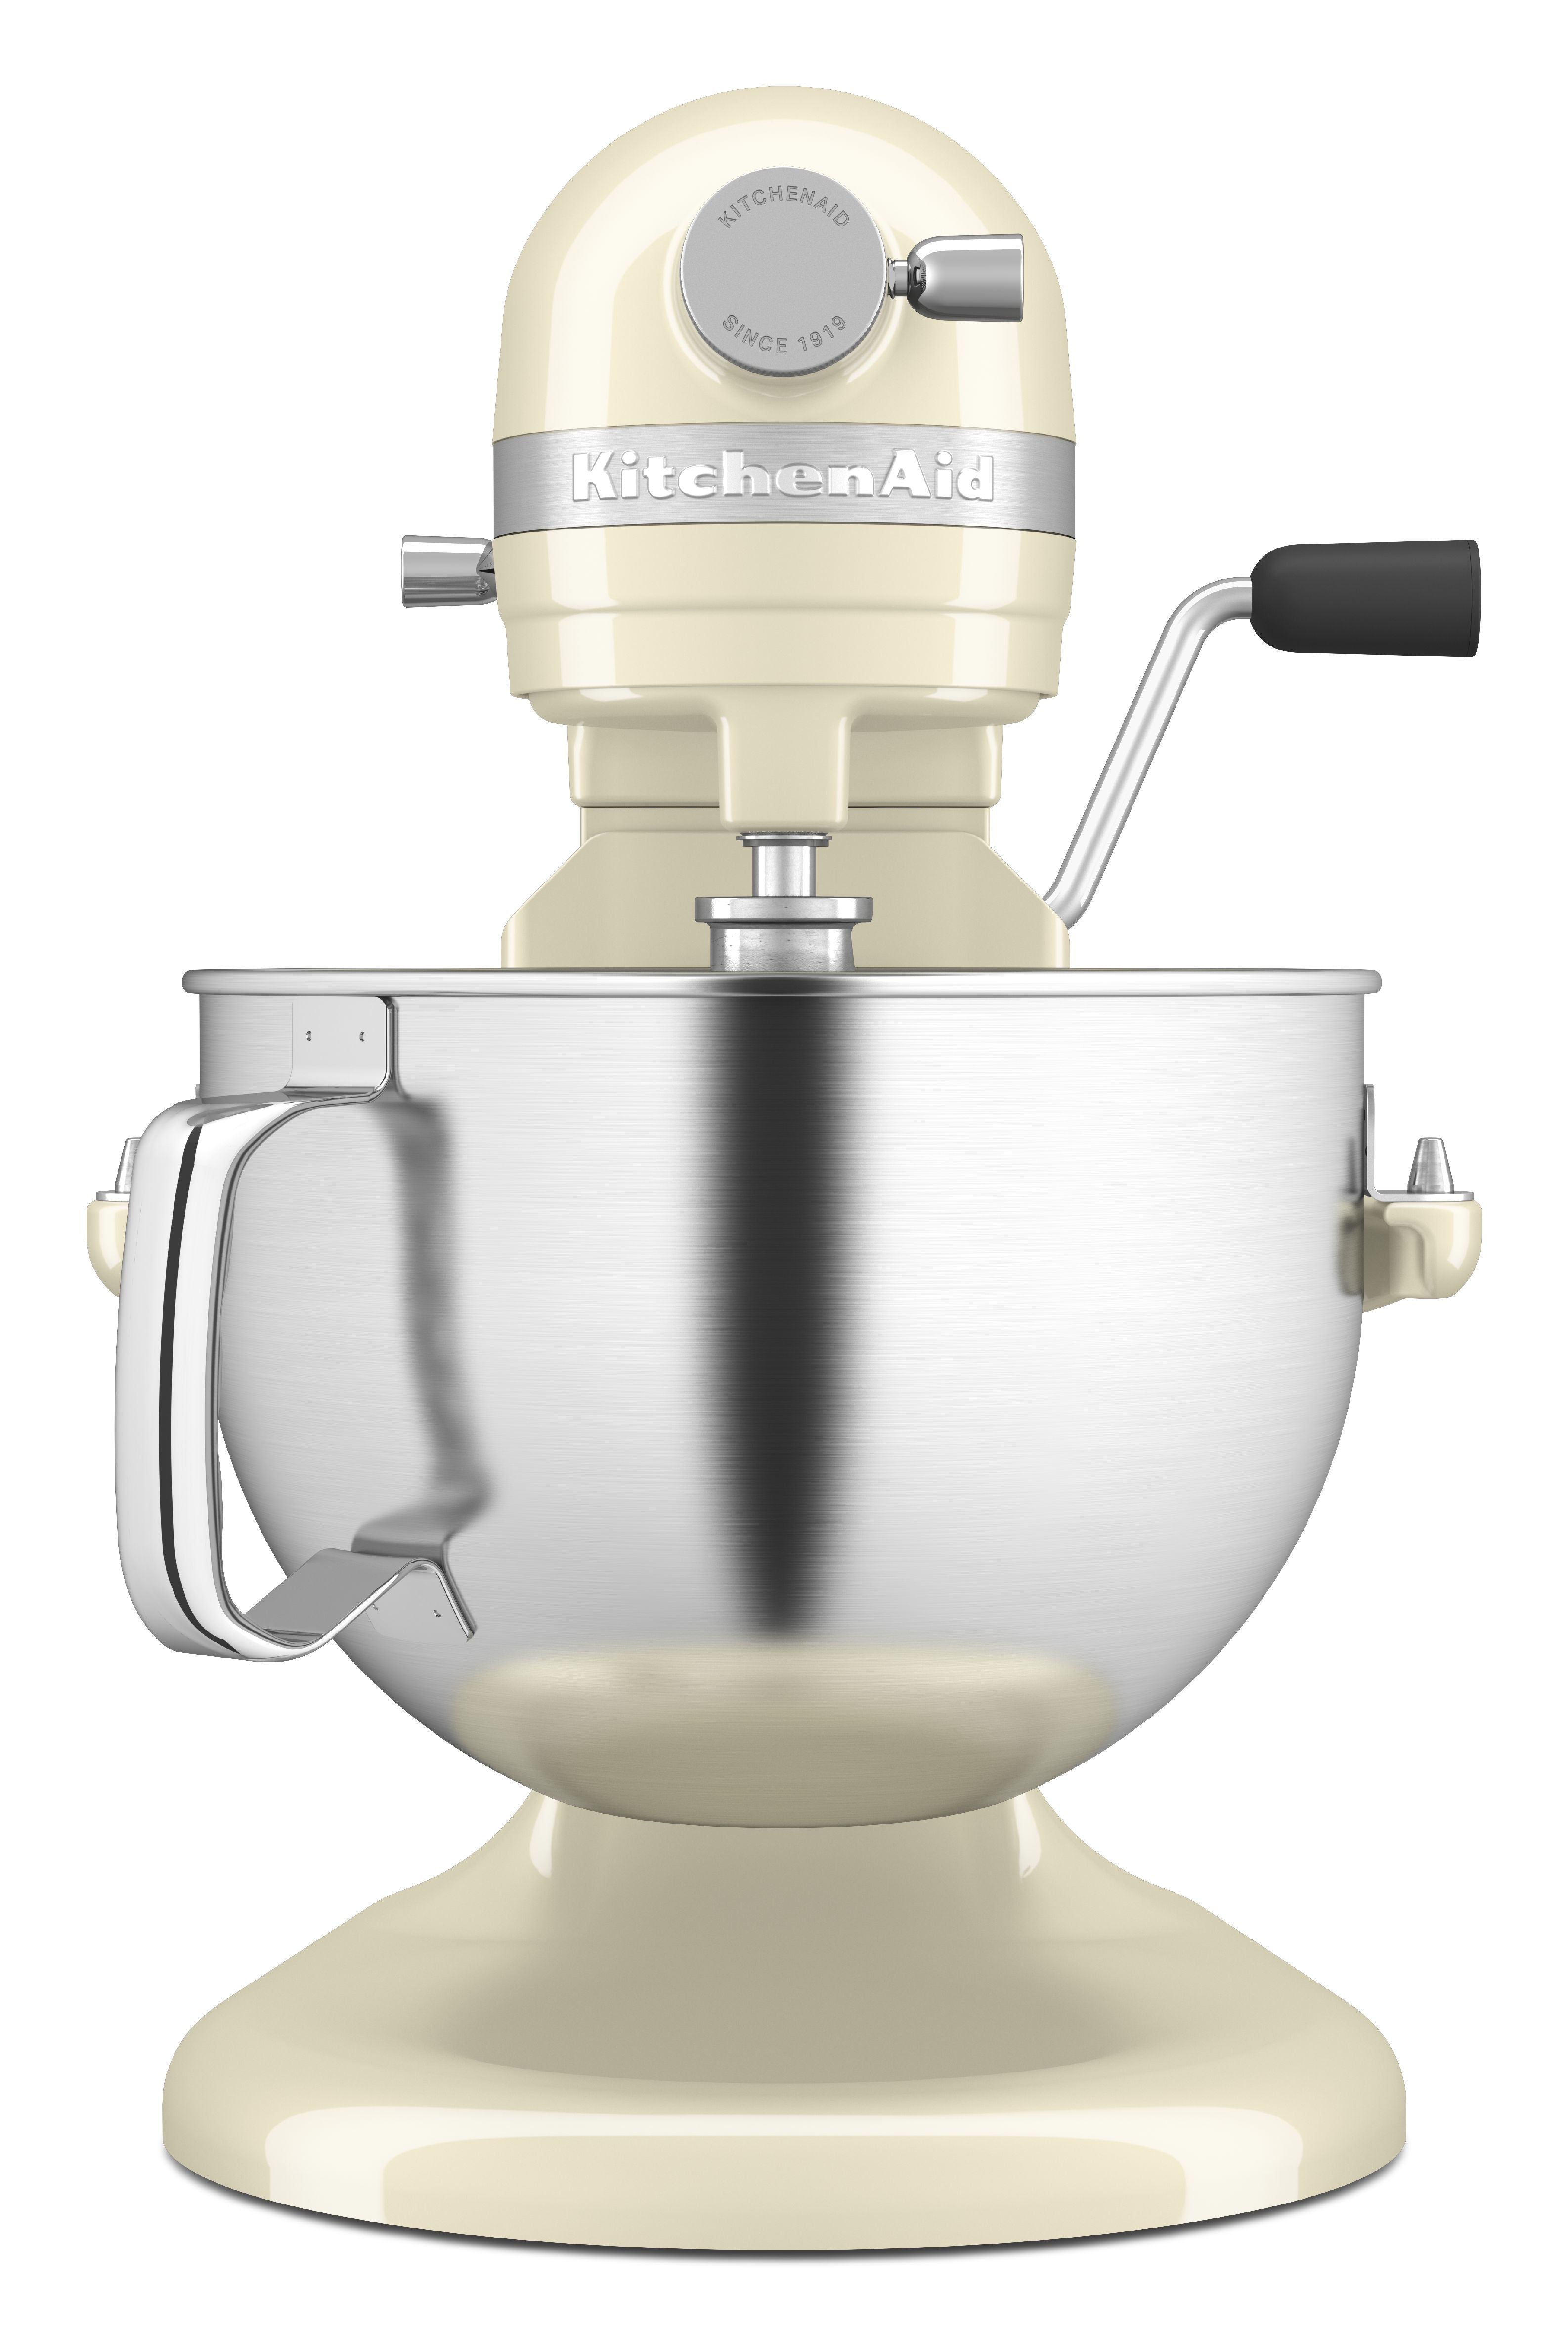 Kökhjälp Artisan Bowl Lift Stand Mixer 5.6 L, Almond Cream